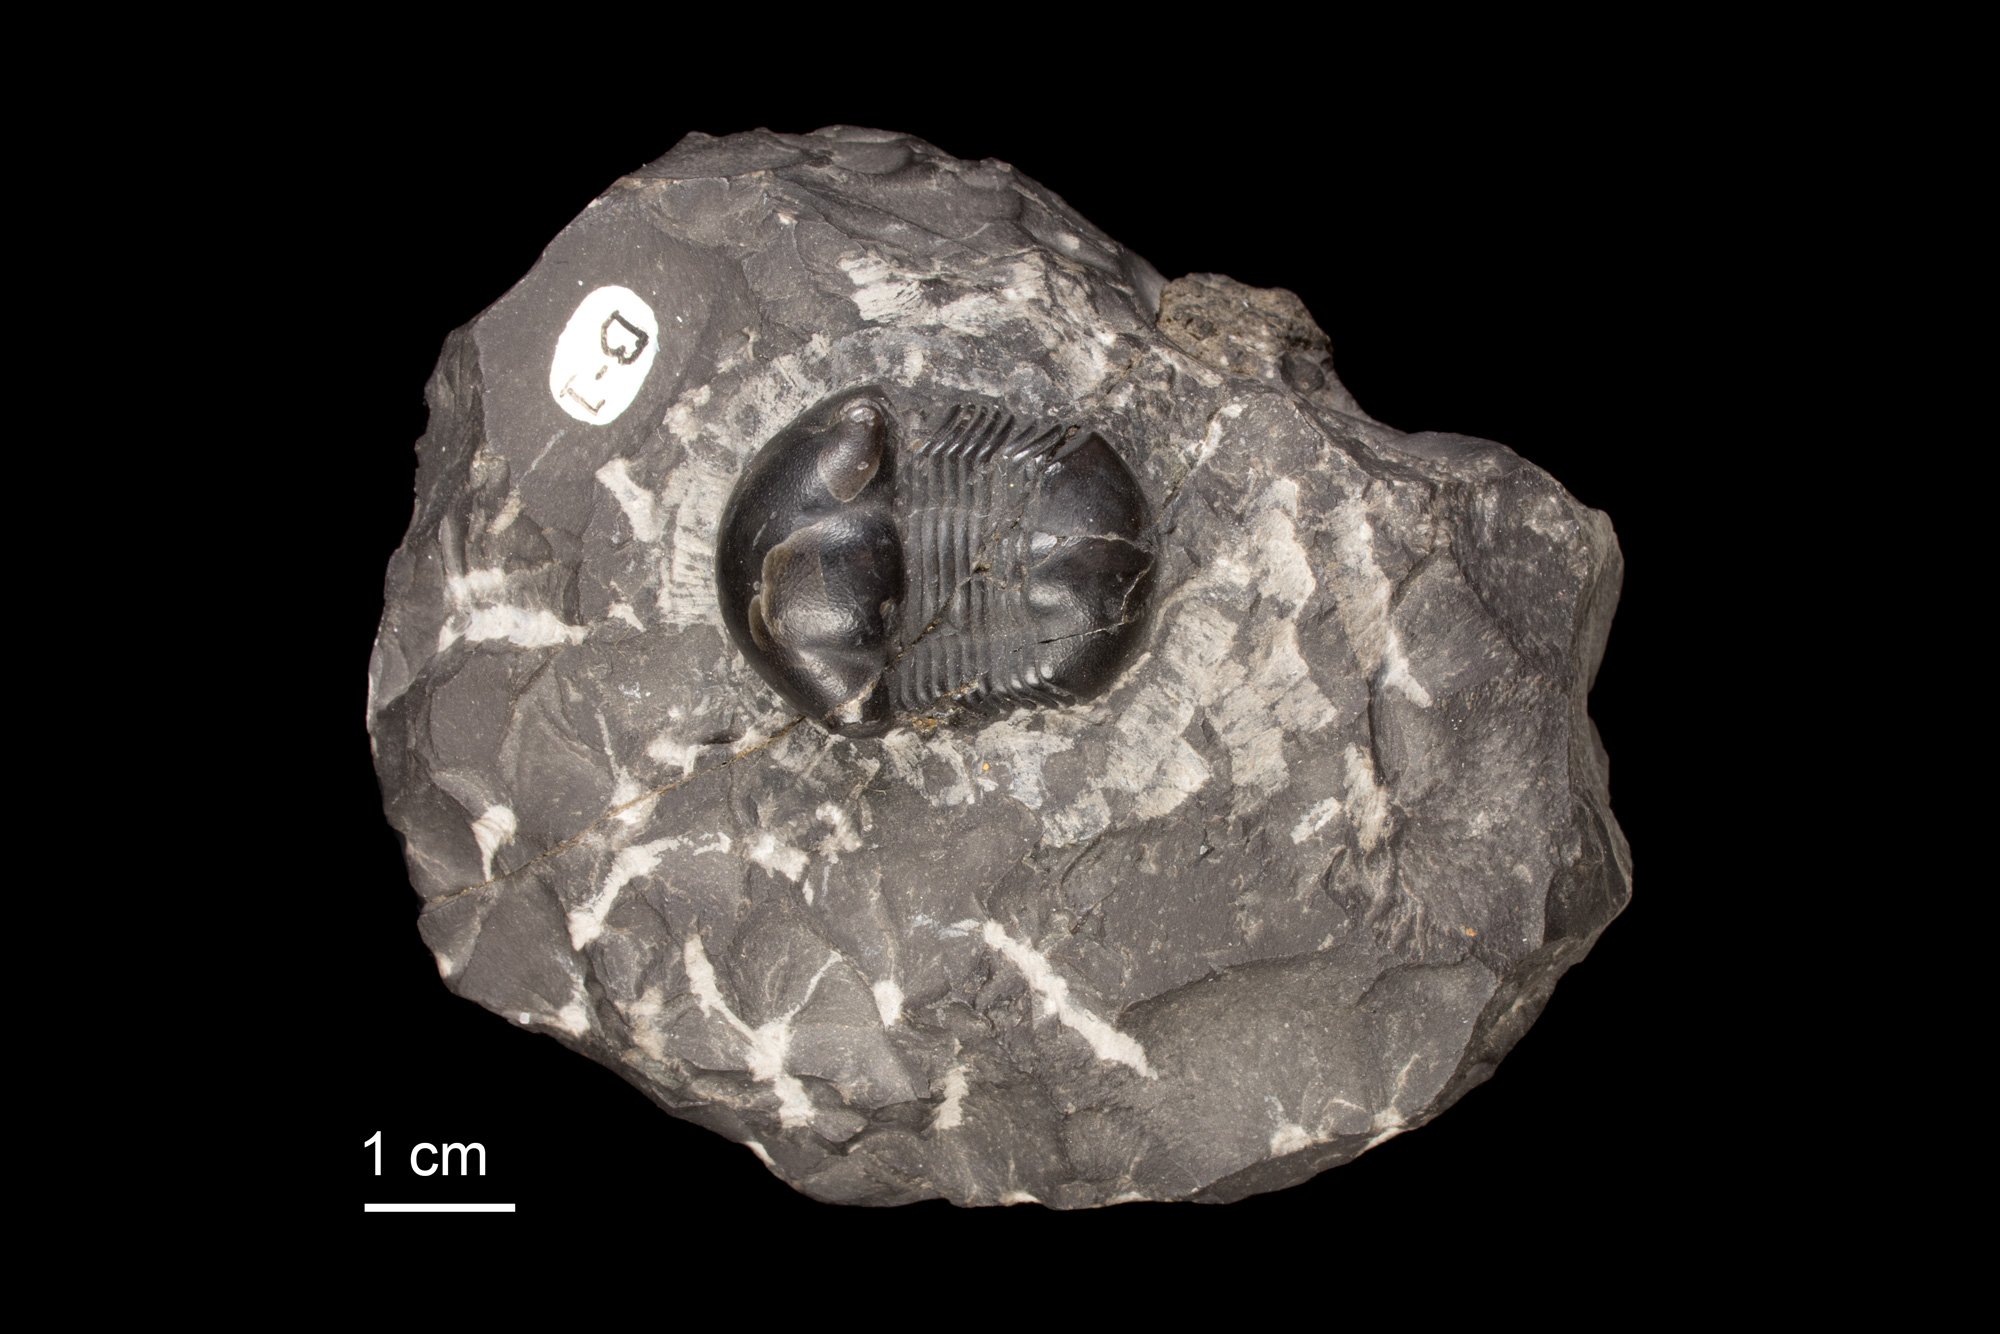 Photograph of a fossil of the trilobite Nanillaenus americanus.